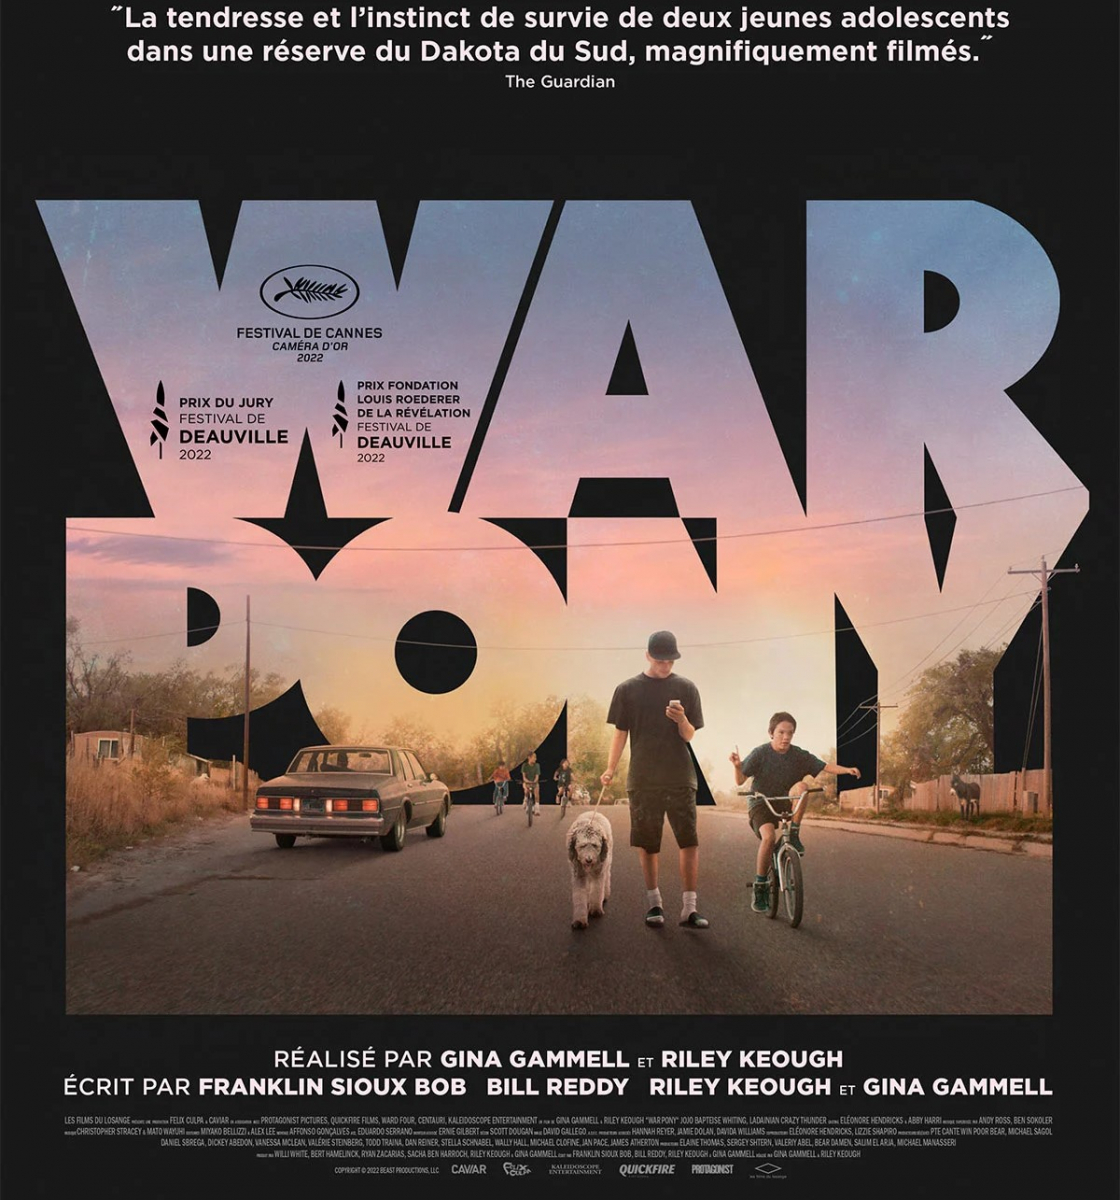 War Pony (115’) - Film américano-britannique de Riley Keough et Gina Gammell